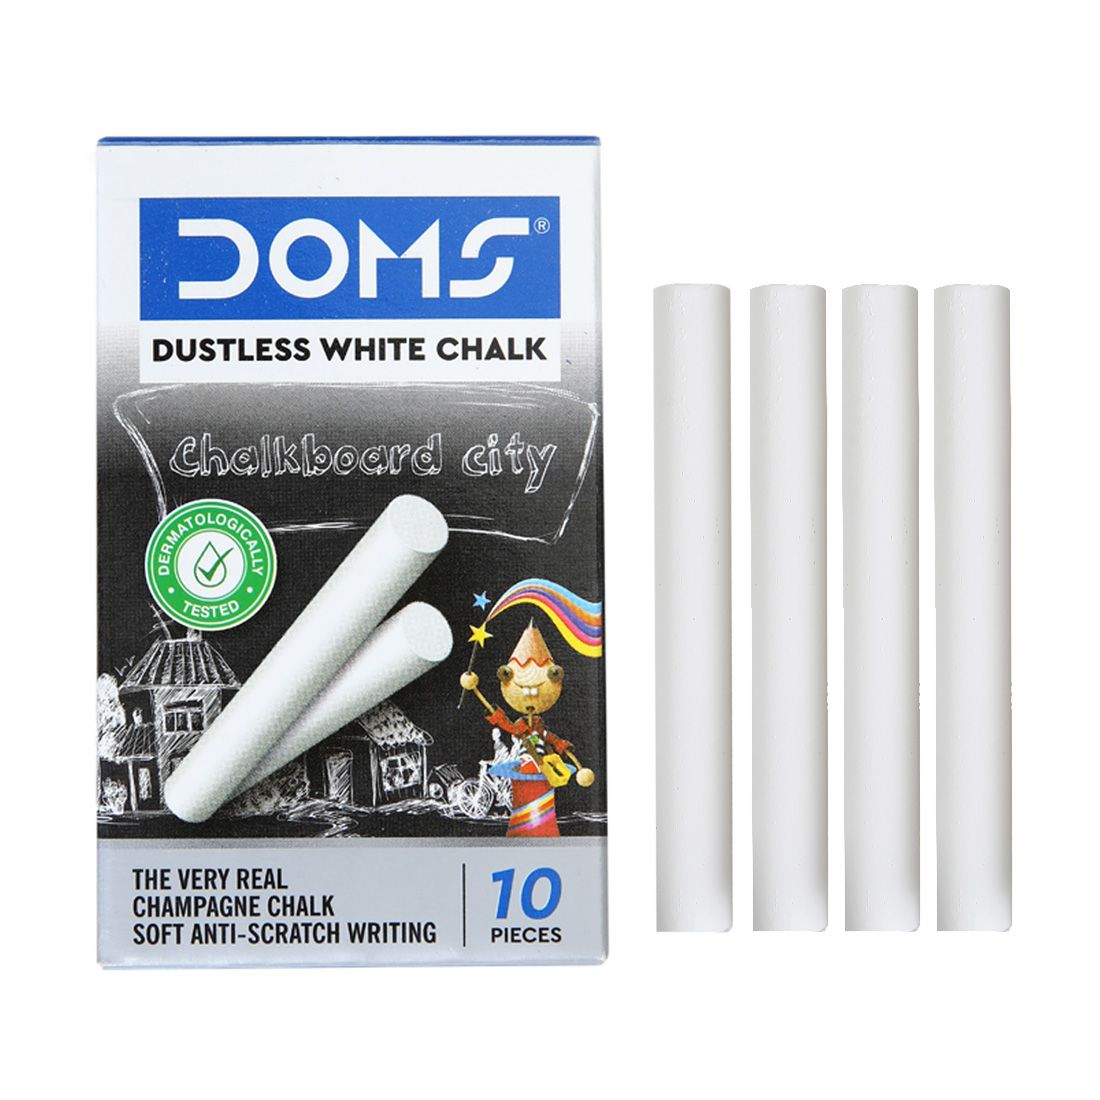 Doms Dustless Chalk White Pack Of 10Pcs – Itsy Bitsy